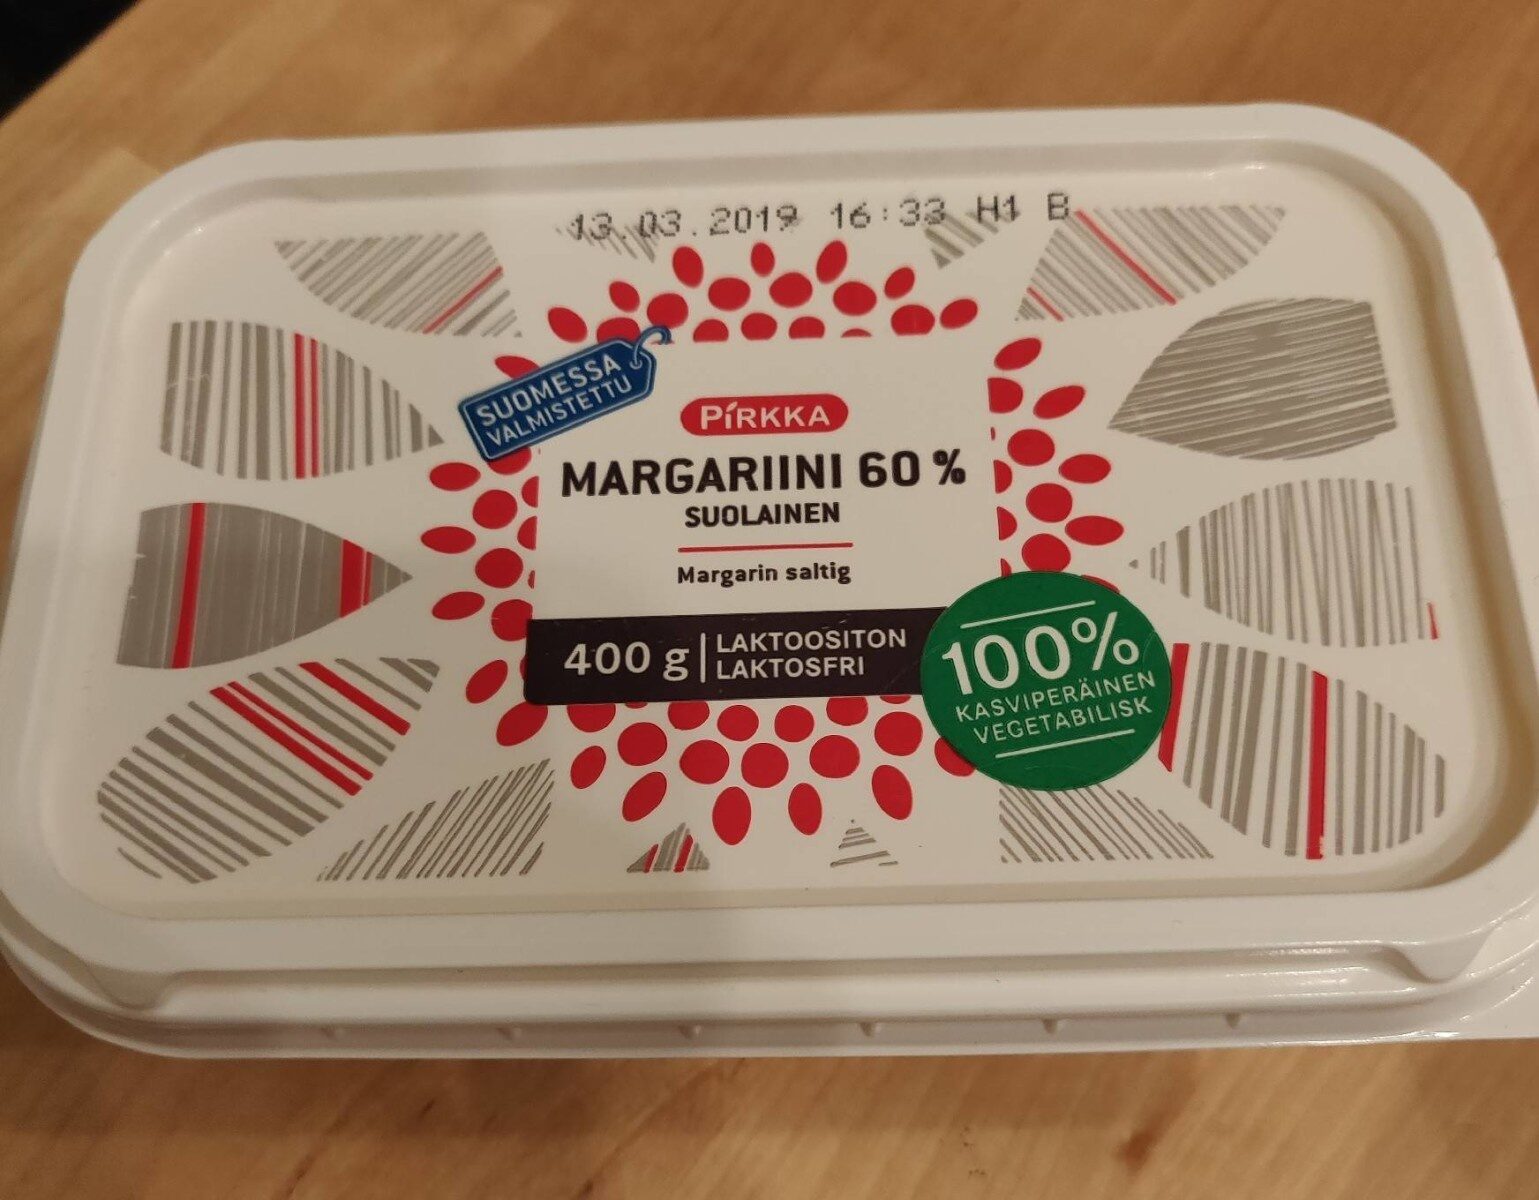 Margariini 60% suolainen - Product - sv